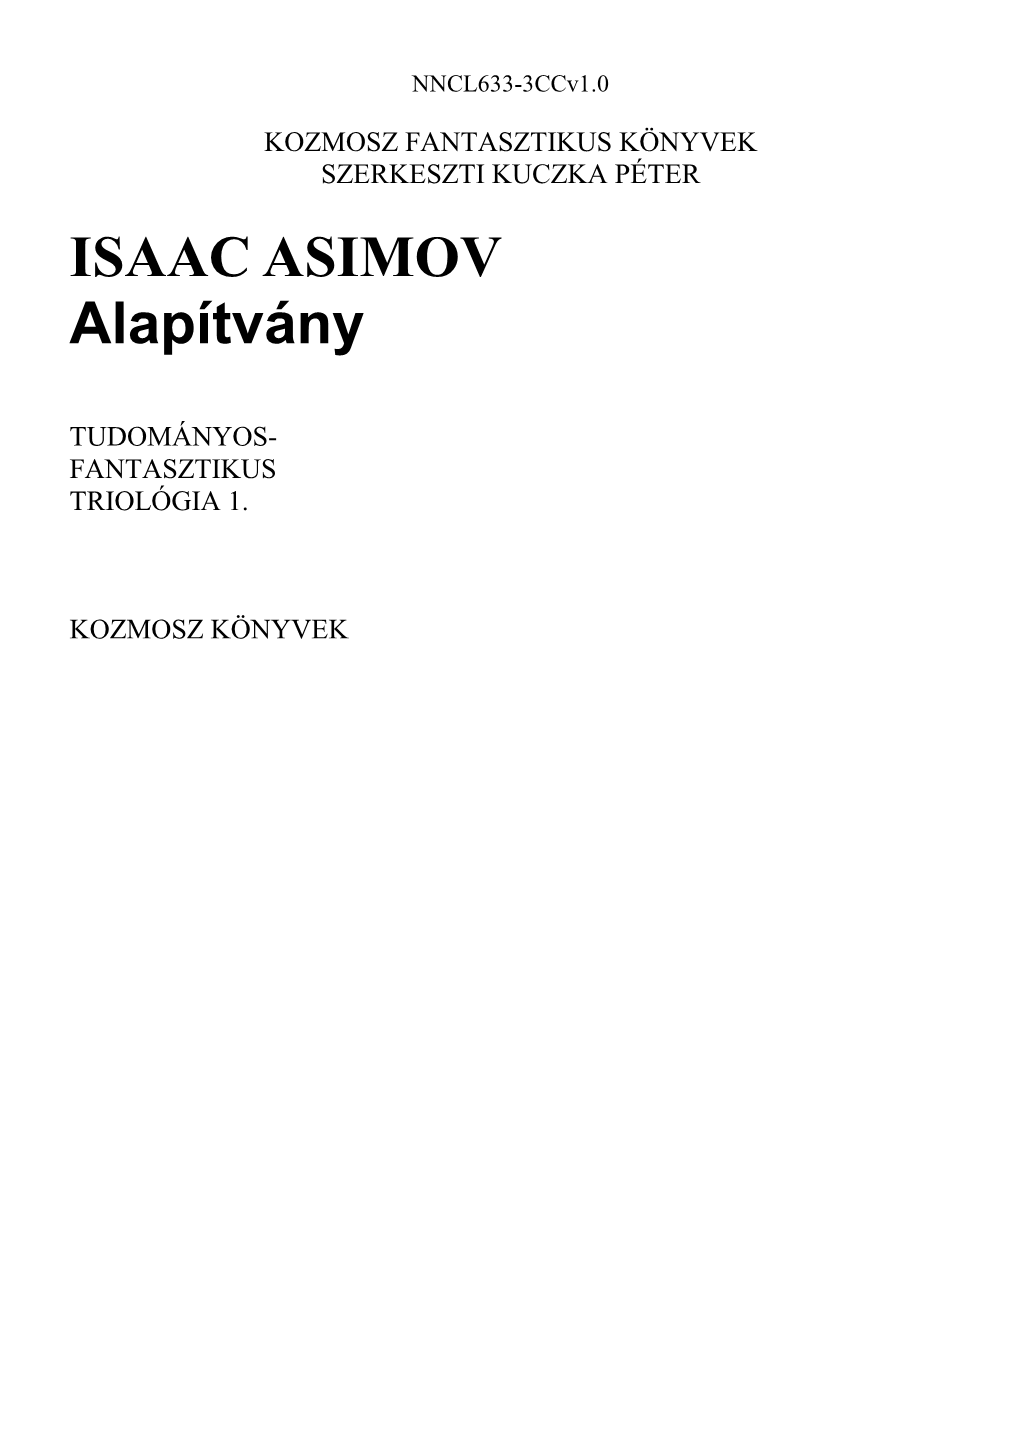 ISAAC ASIMOV Alapítvány